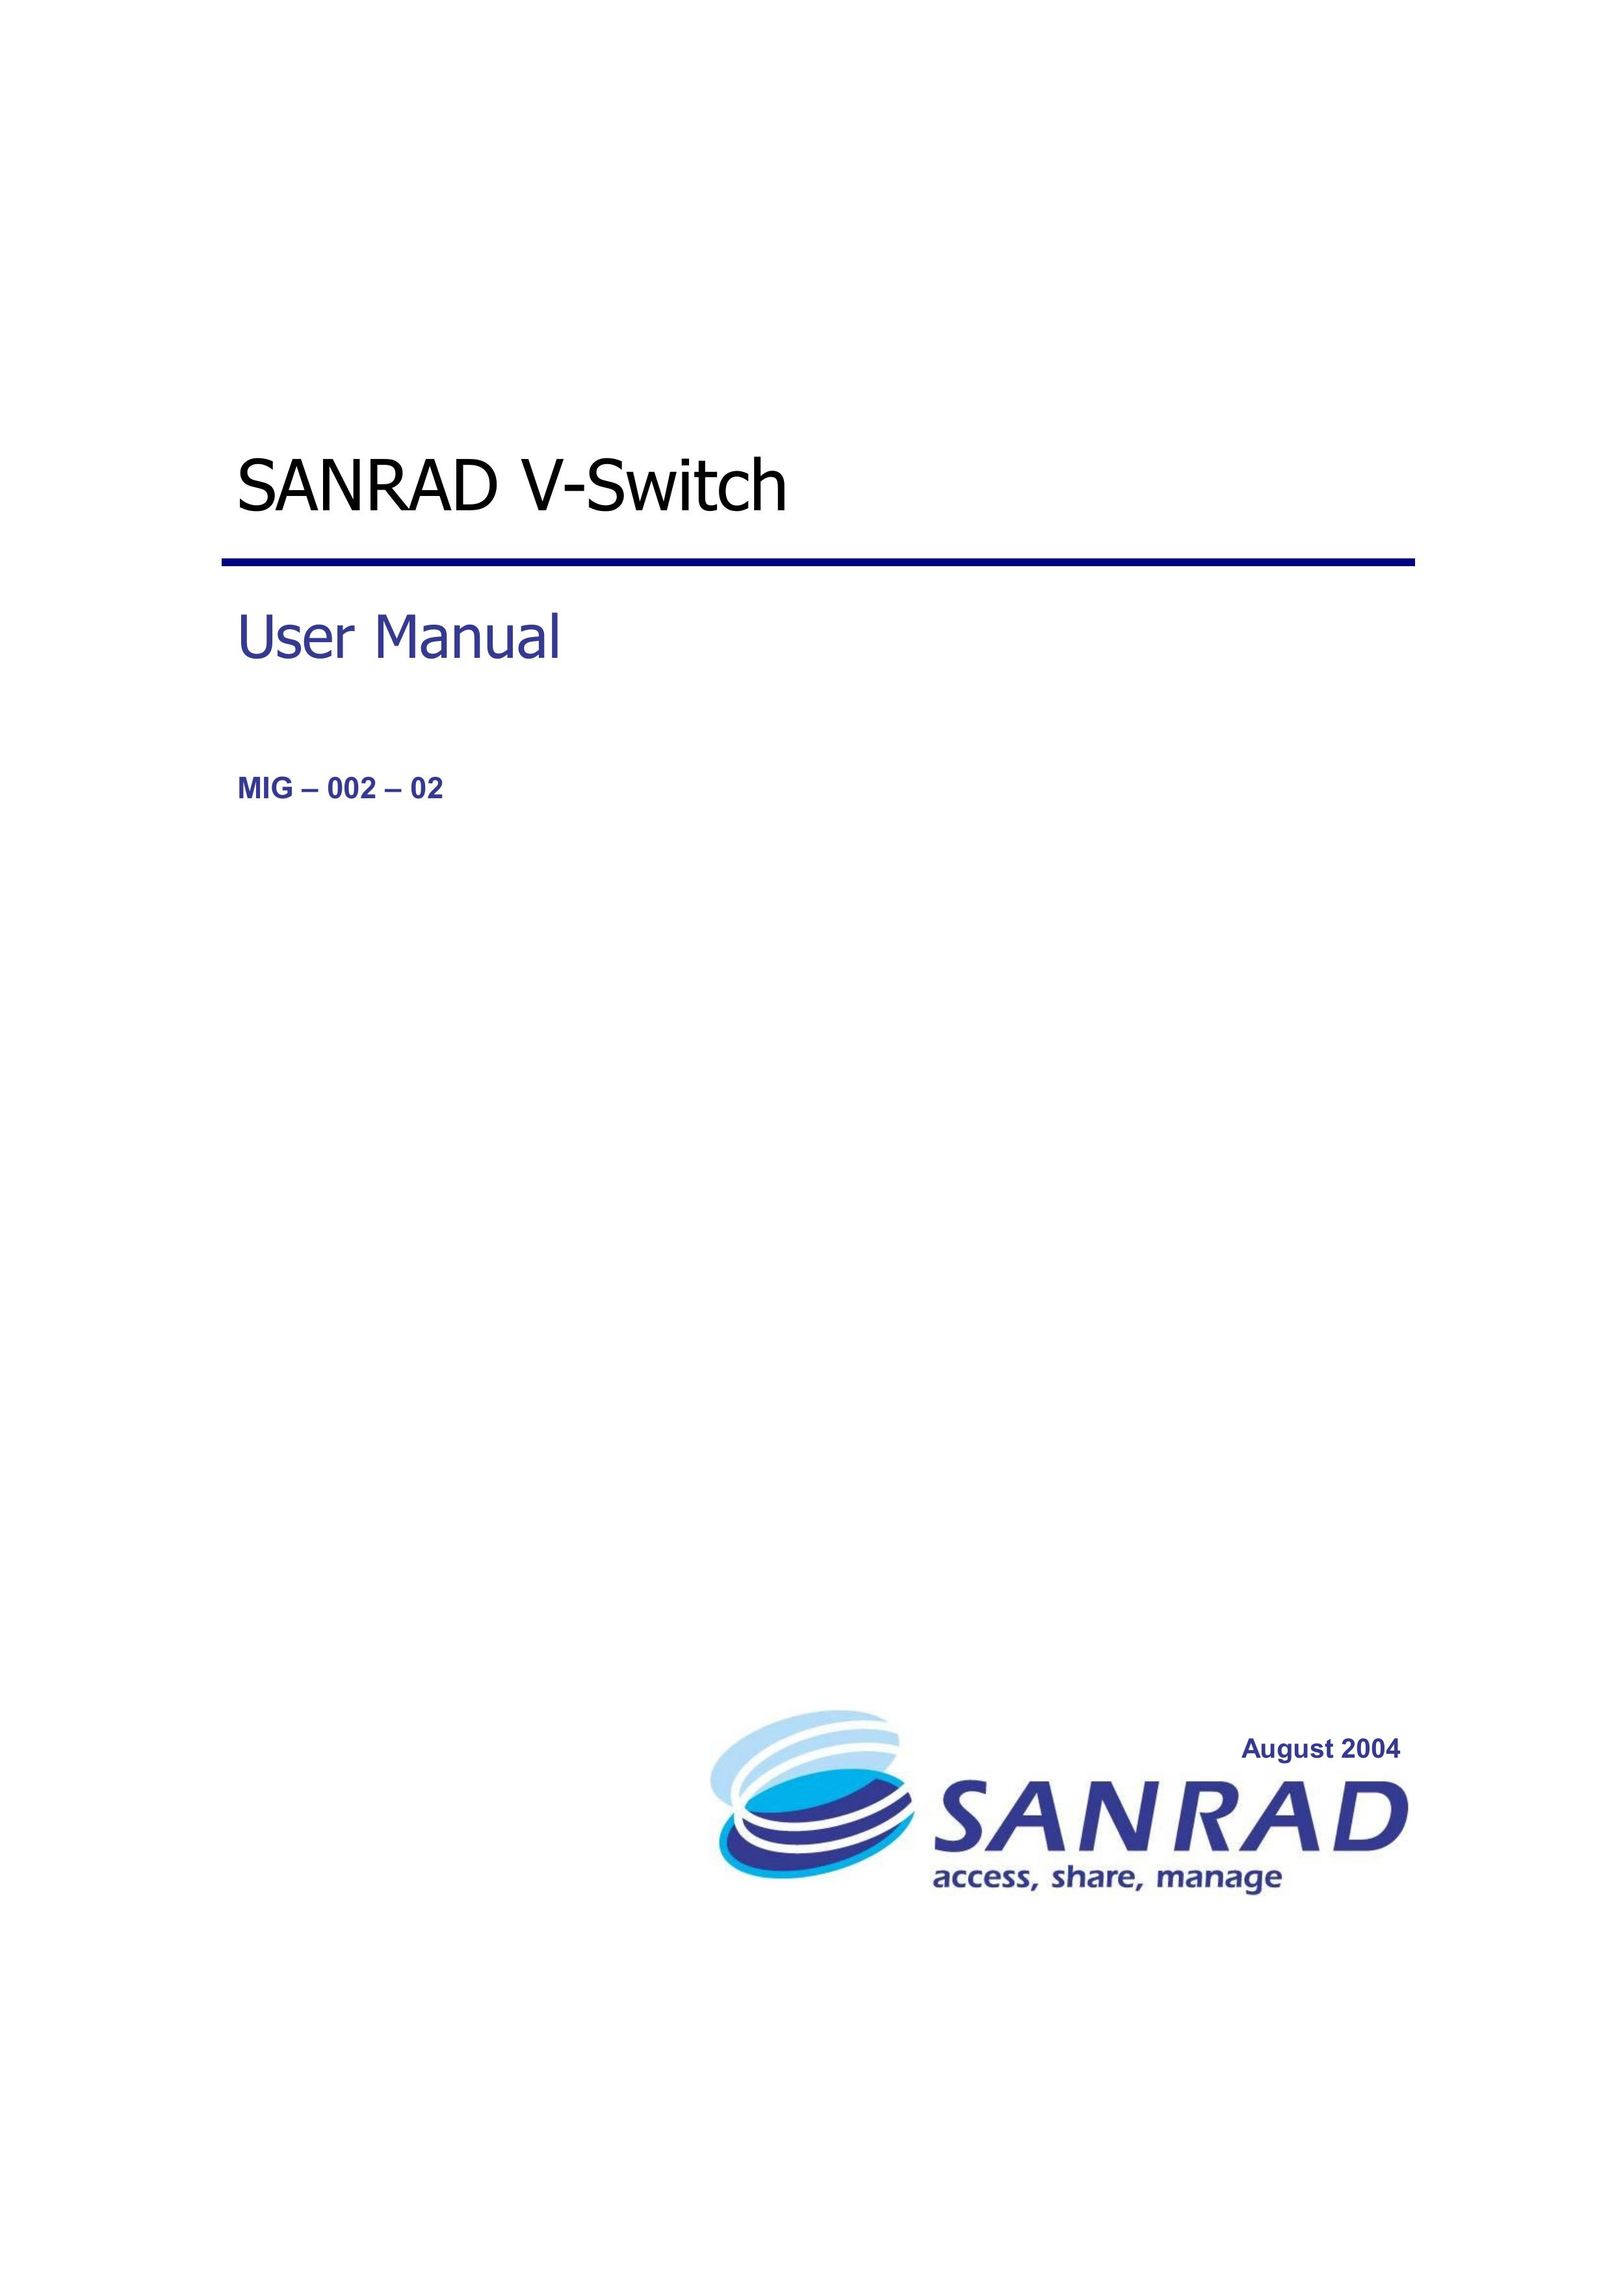 SANRAD V-Switch Switch User Manual